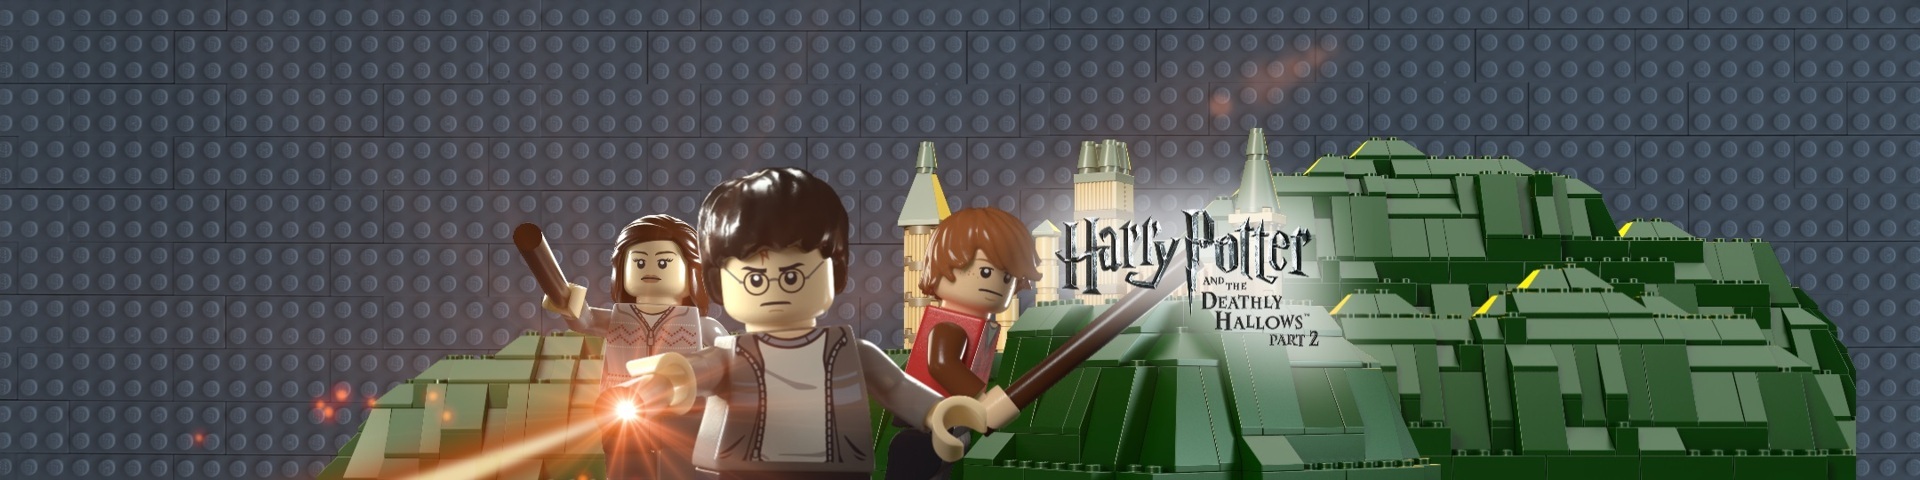 harry-potter-lego